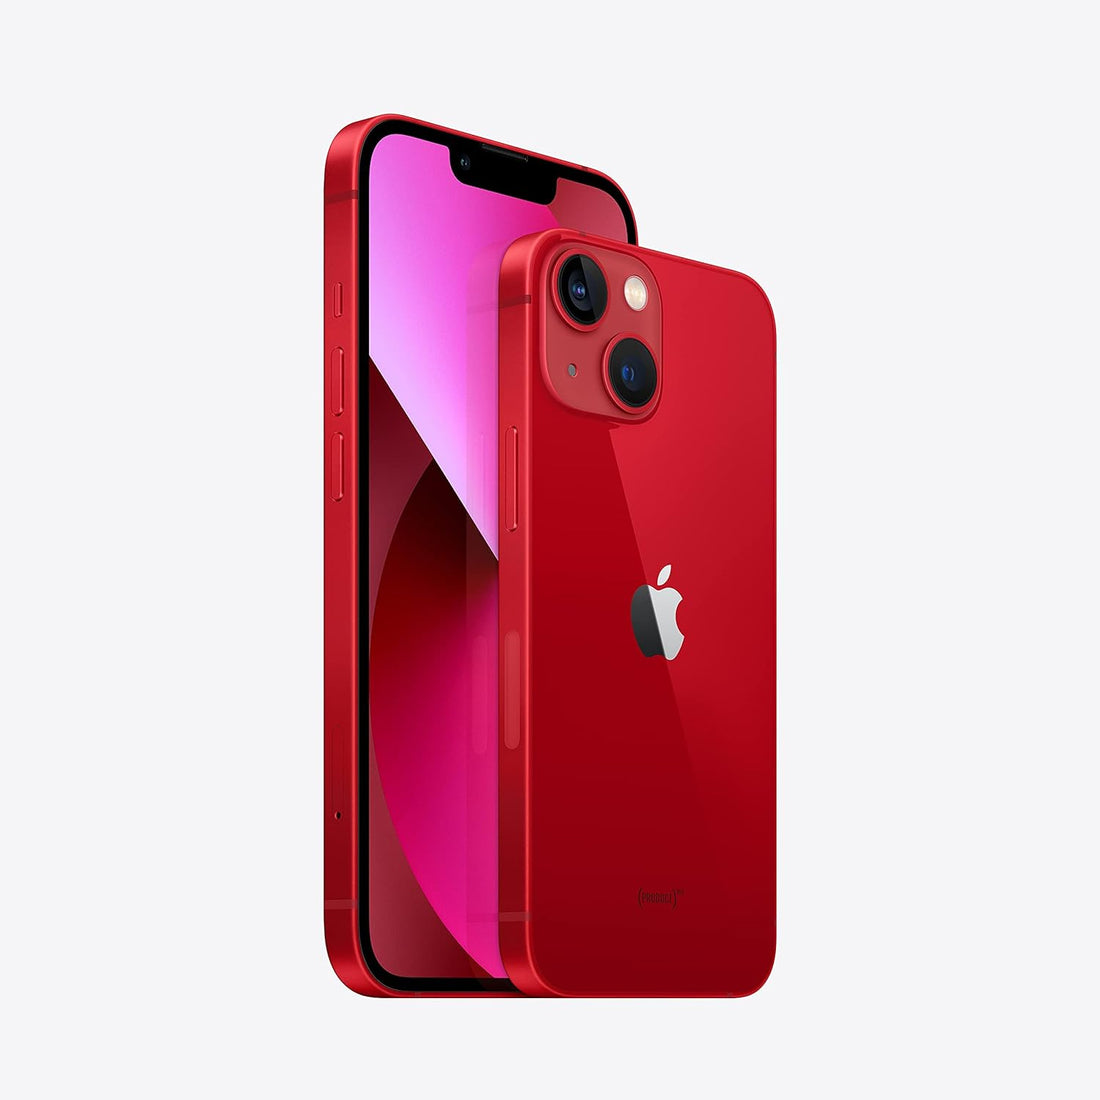 Apple iPhone 13 Mini 512GB (Unlocked) - (PRODUCT)RED (Refurbished)